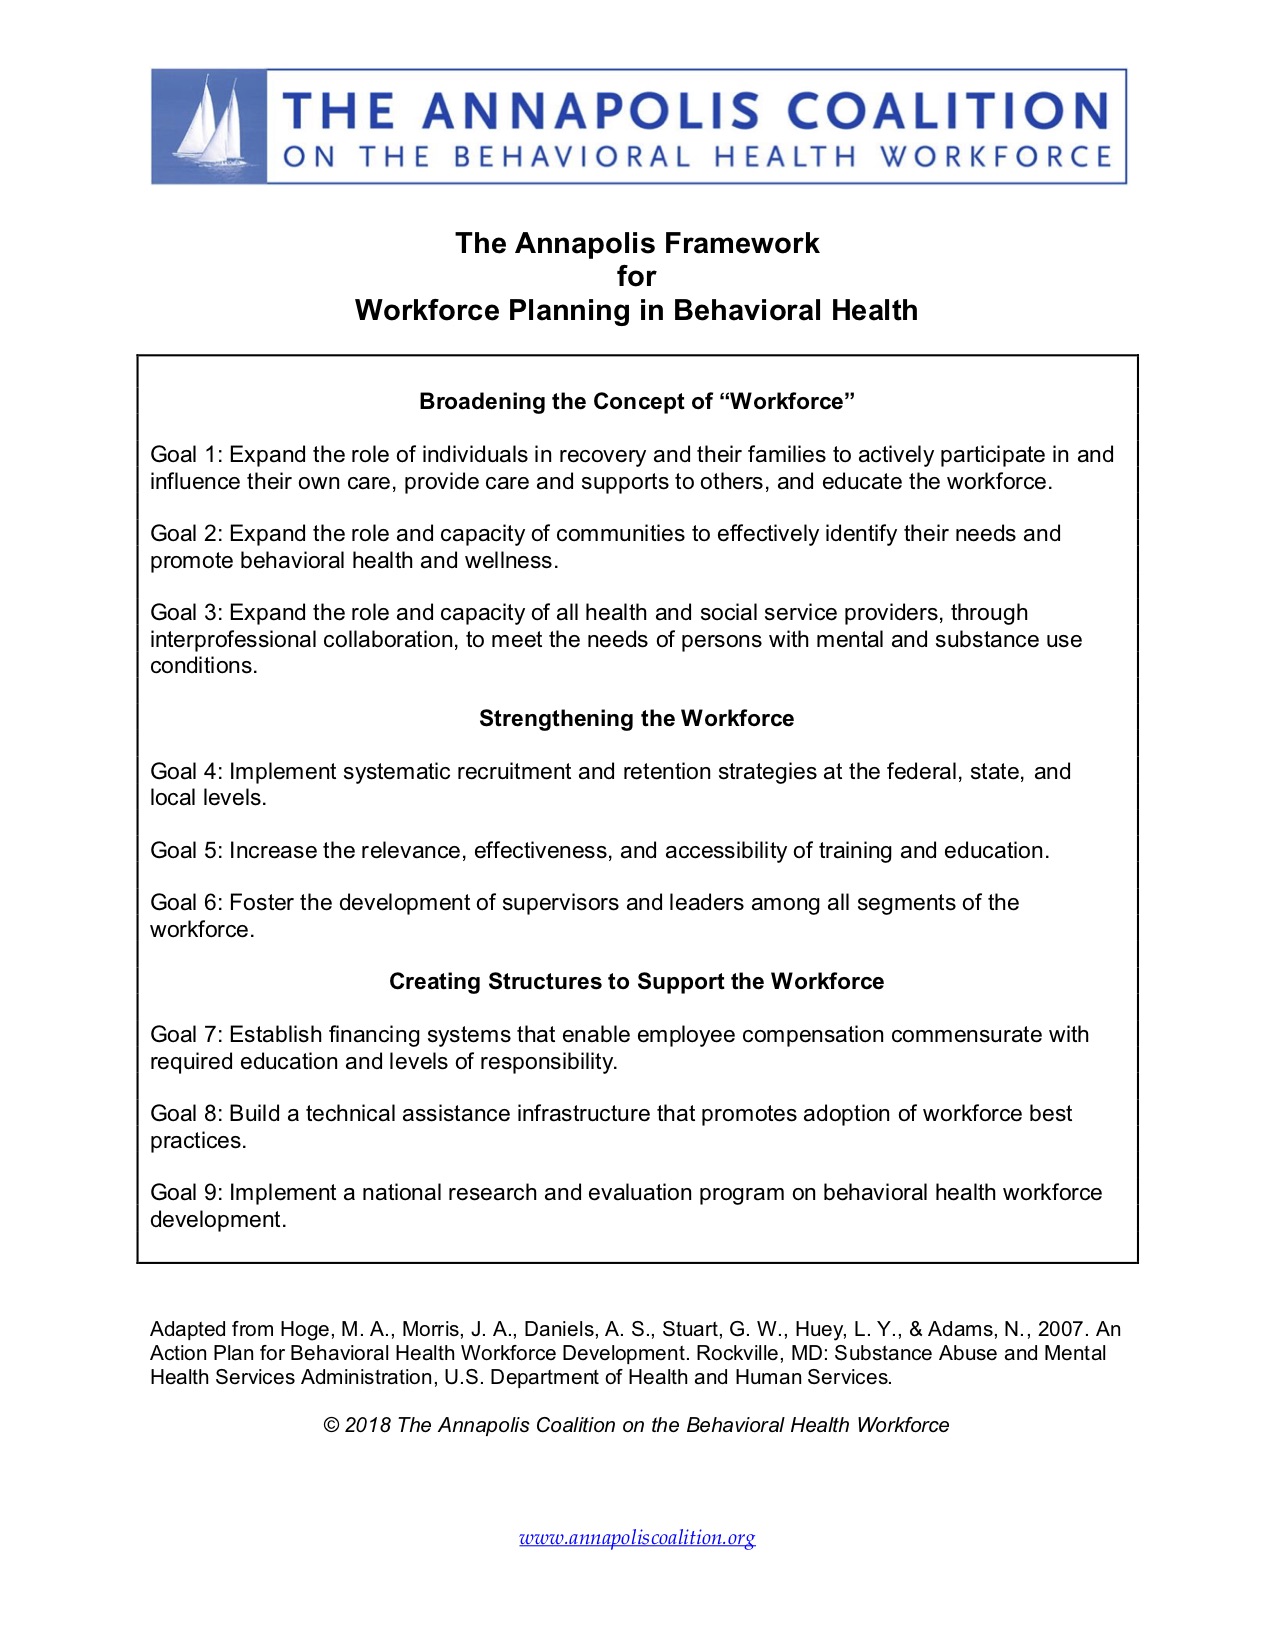 Annapolis Framework pdf file